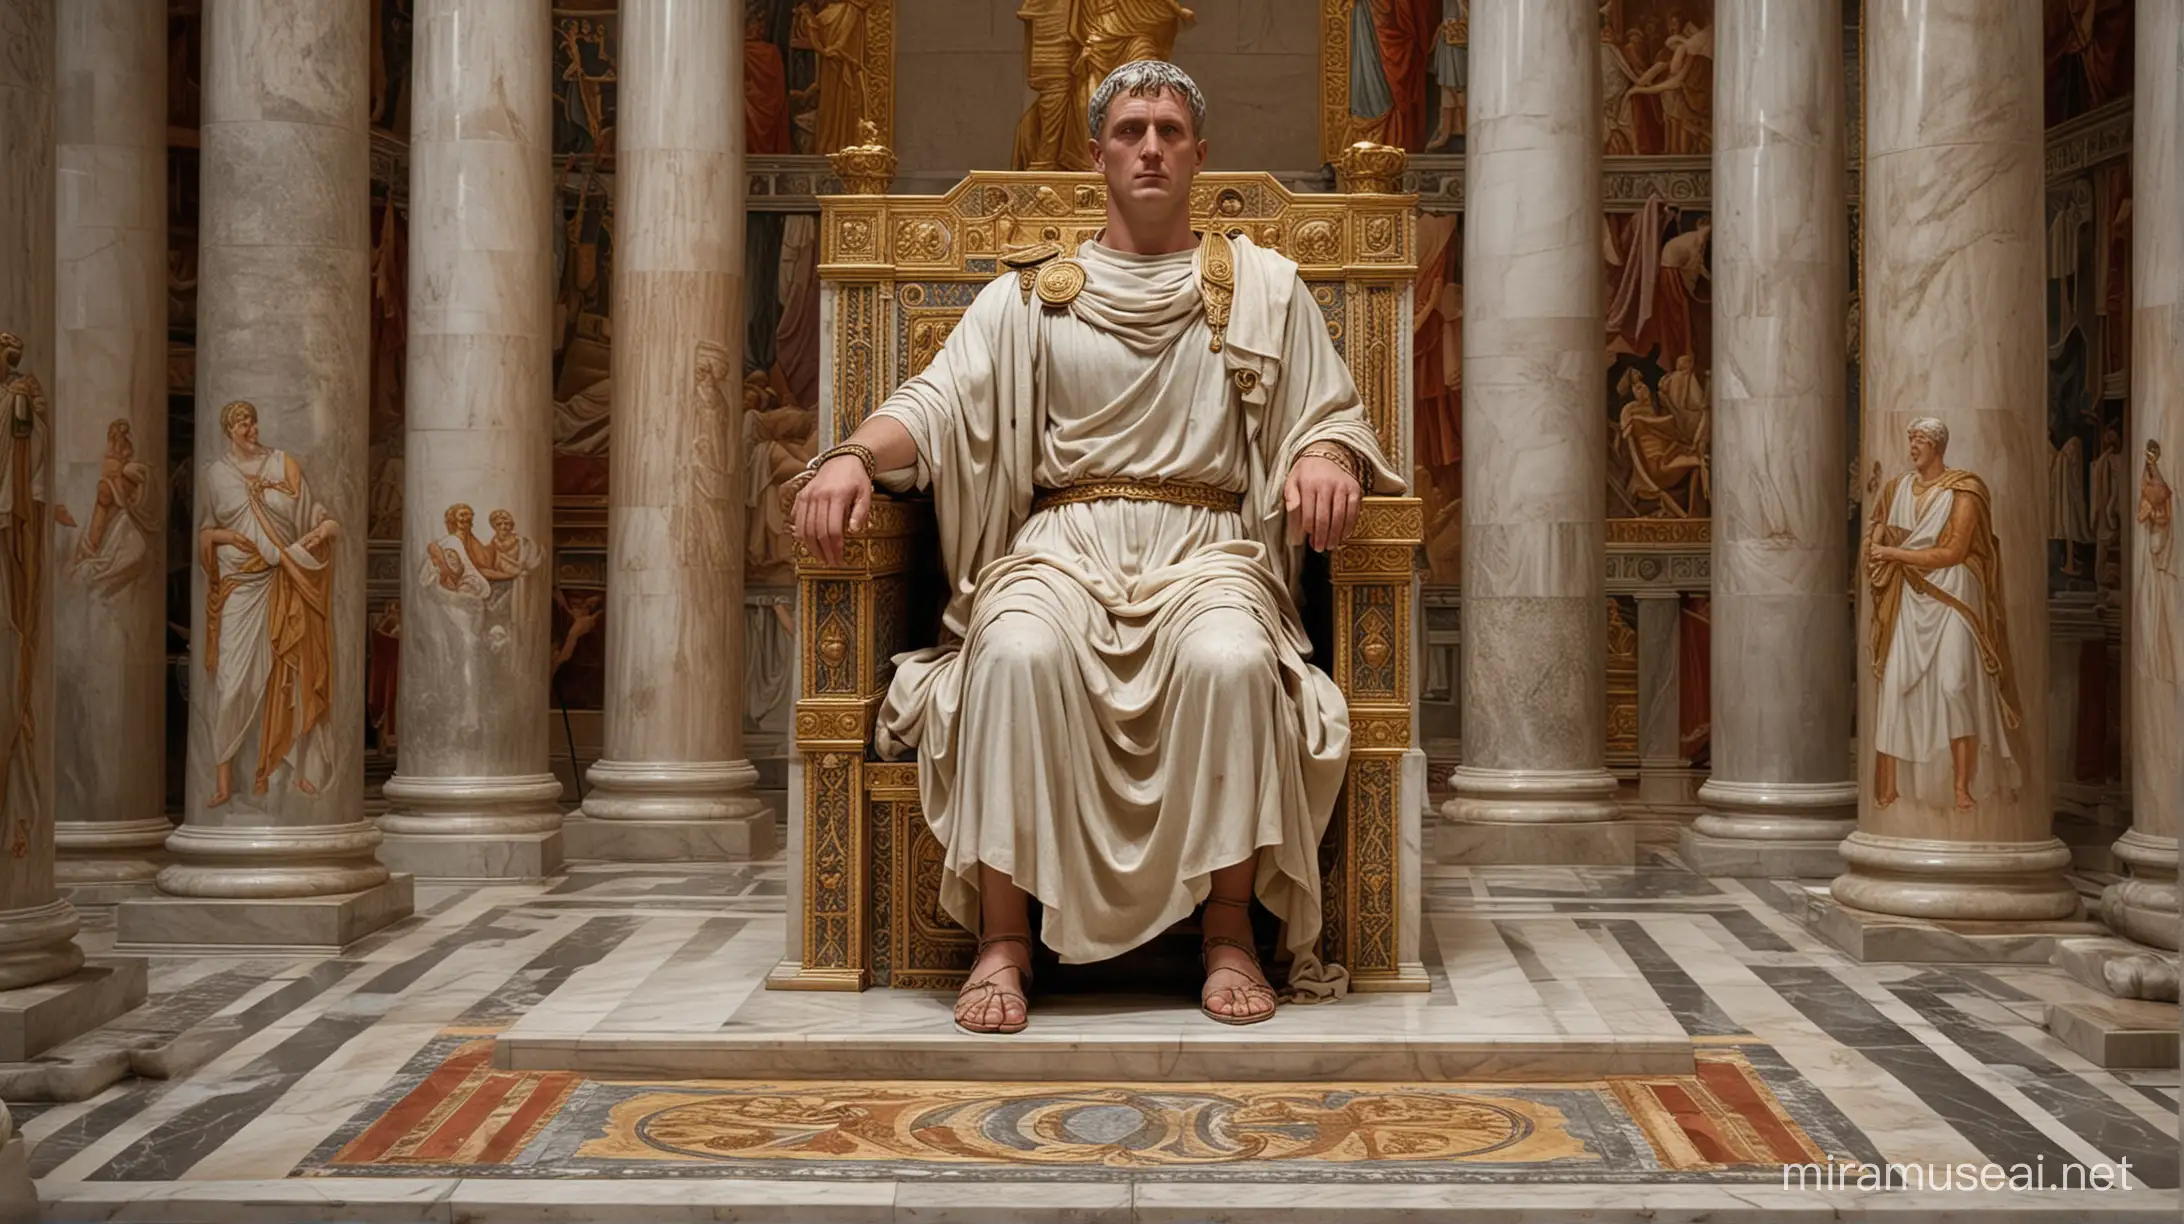 Emperor Trajan in Full Regalia on Throne Amidst Opulent Roman Setting